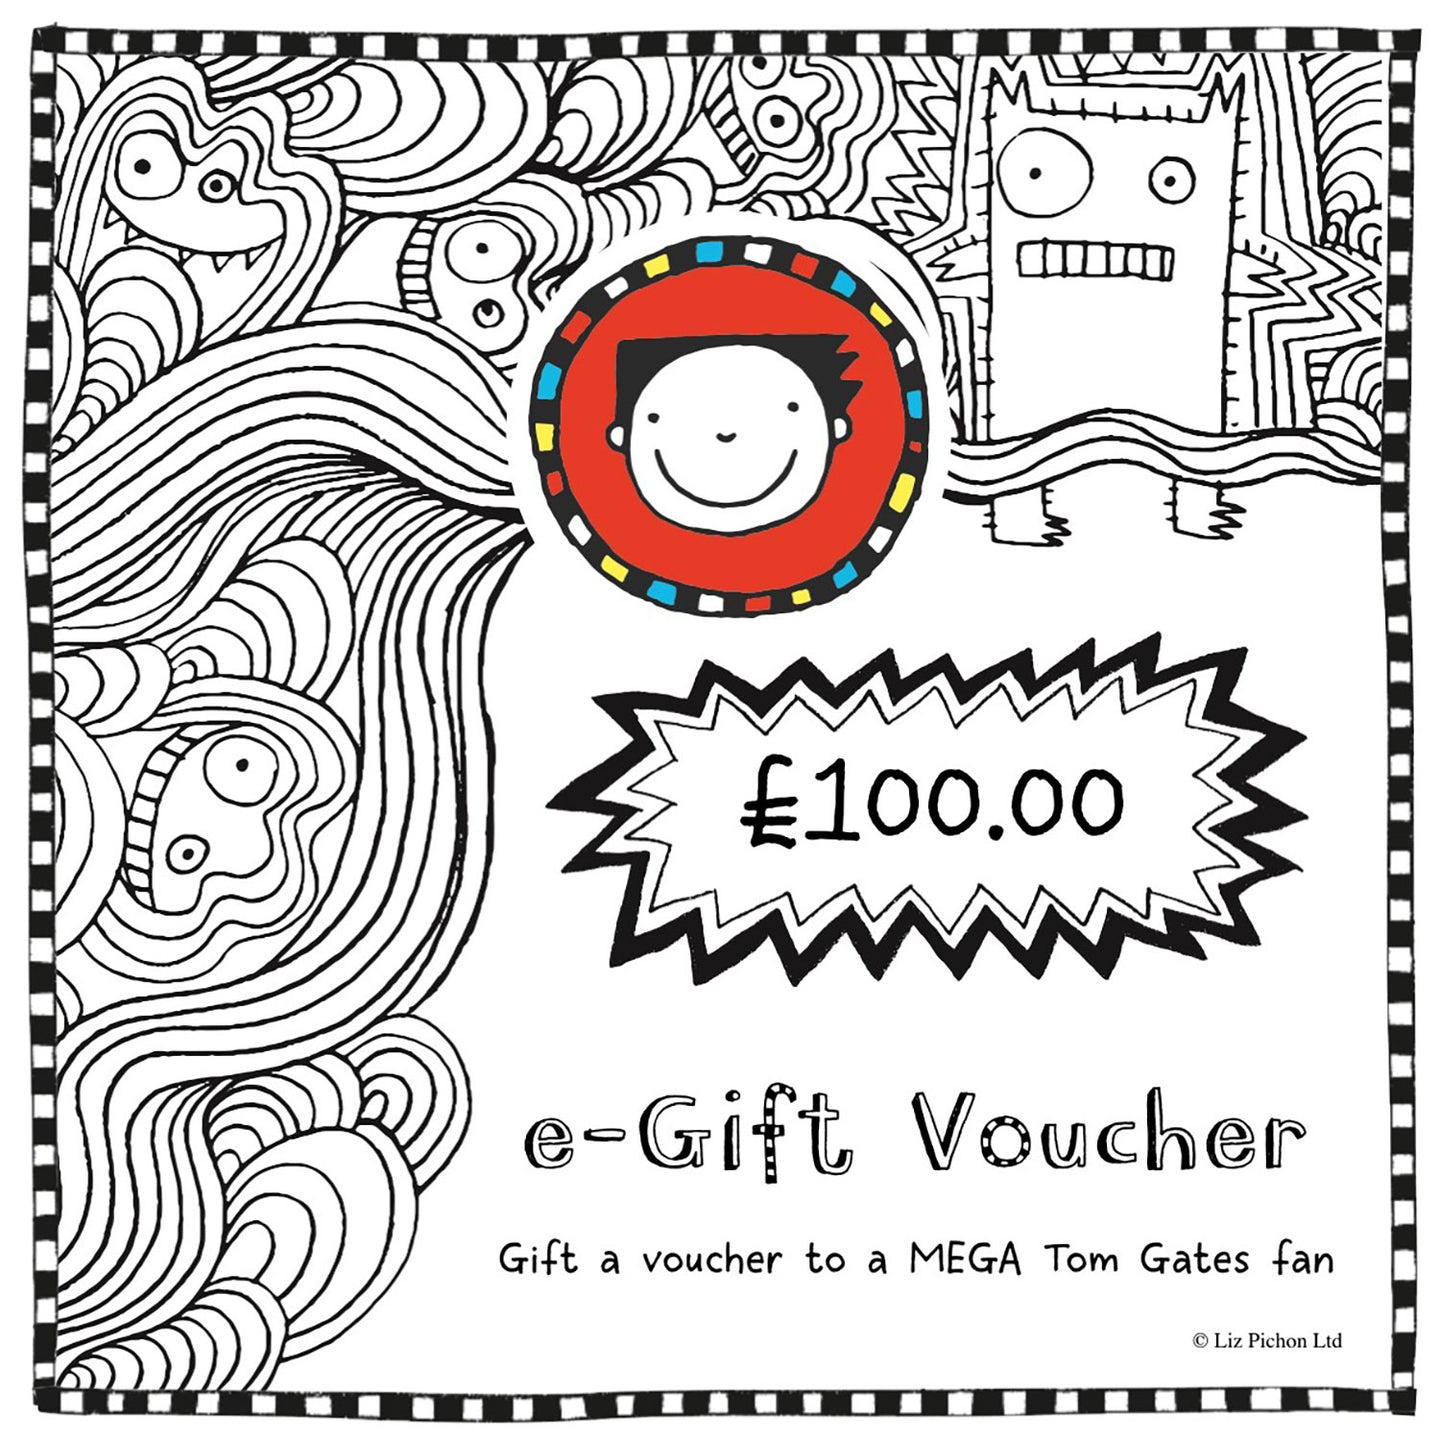 £100 e-Gift Voucher